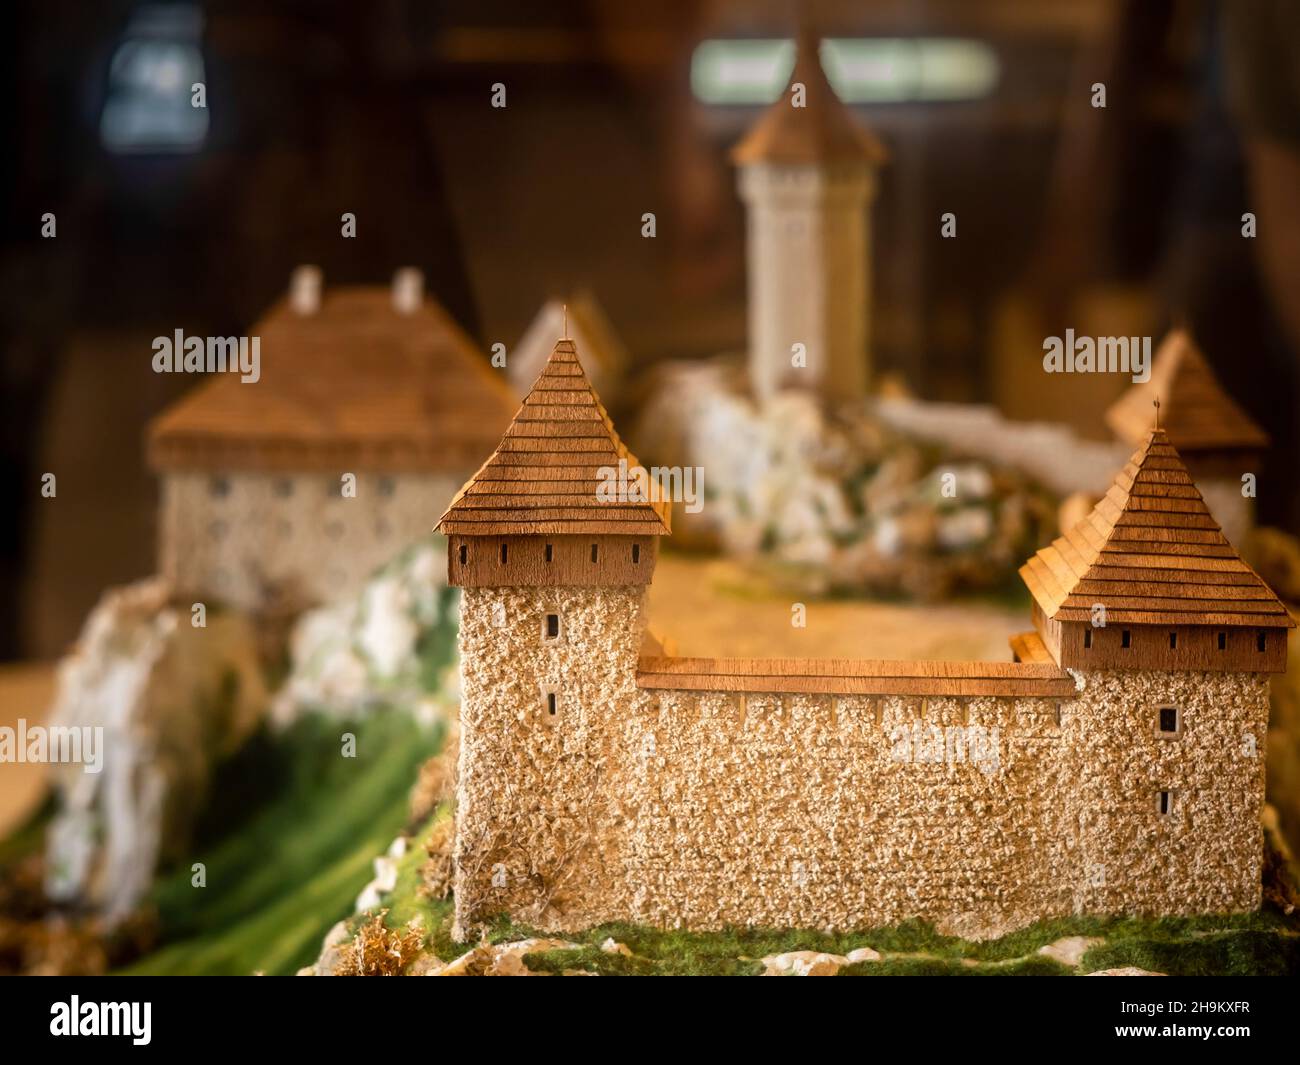 Ojcow, Poland - August 02, 2021: A miniature model of a medieval Ojcow Castle in Polish Jura. Stock Photo